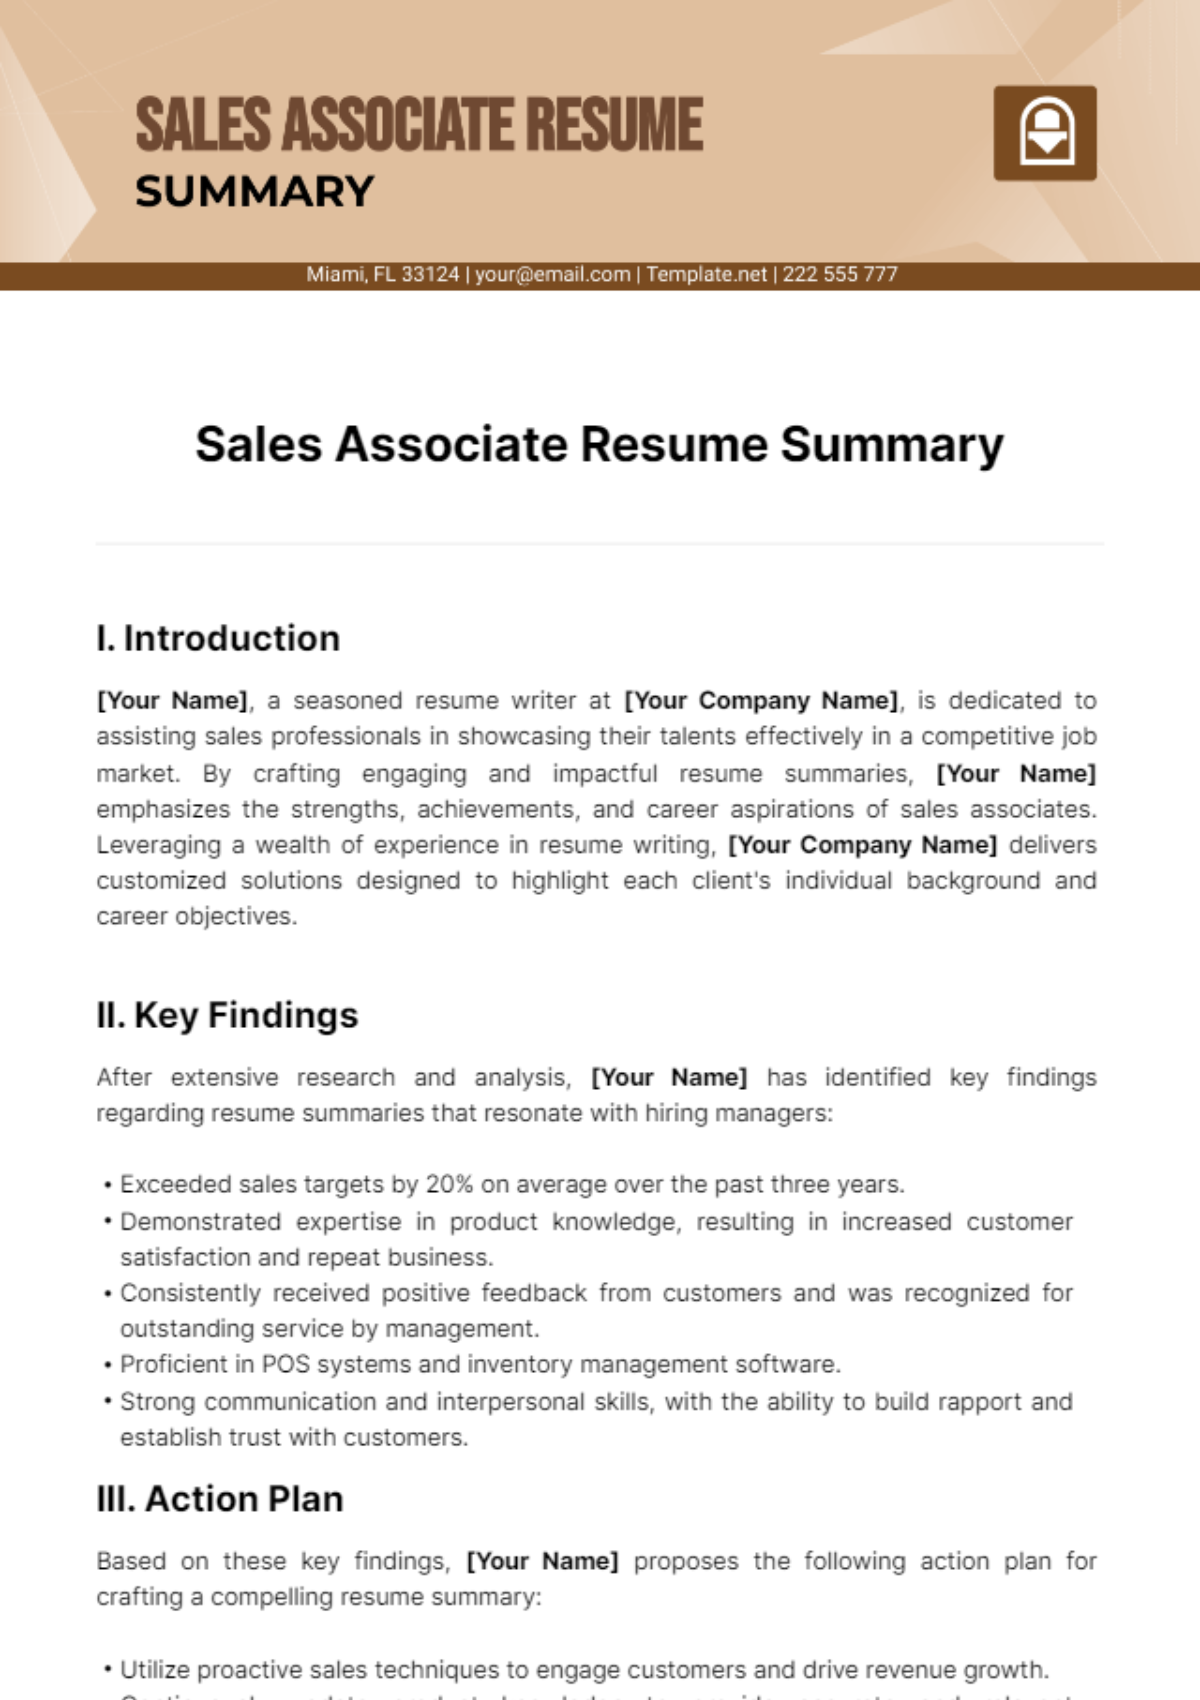 Free Sales Associate Resume Summary Template